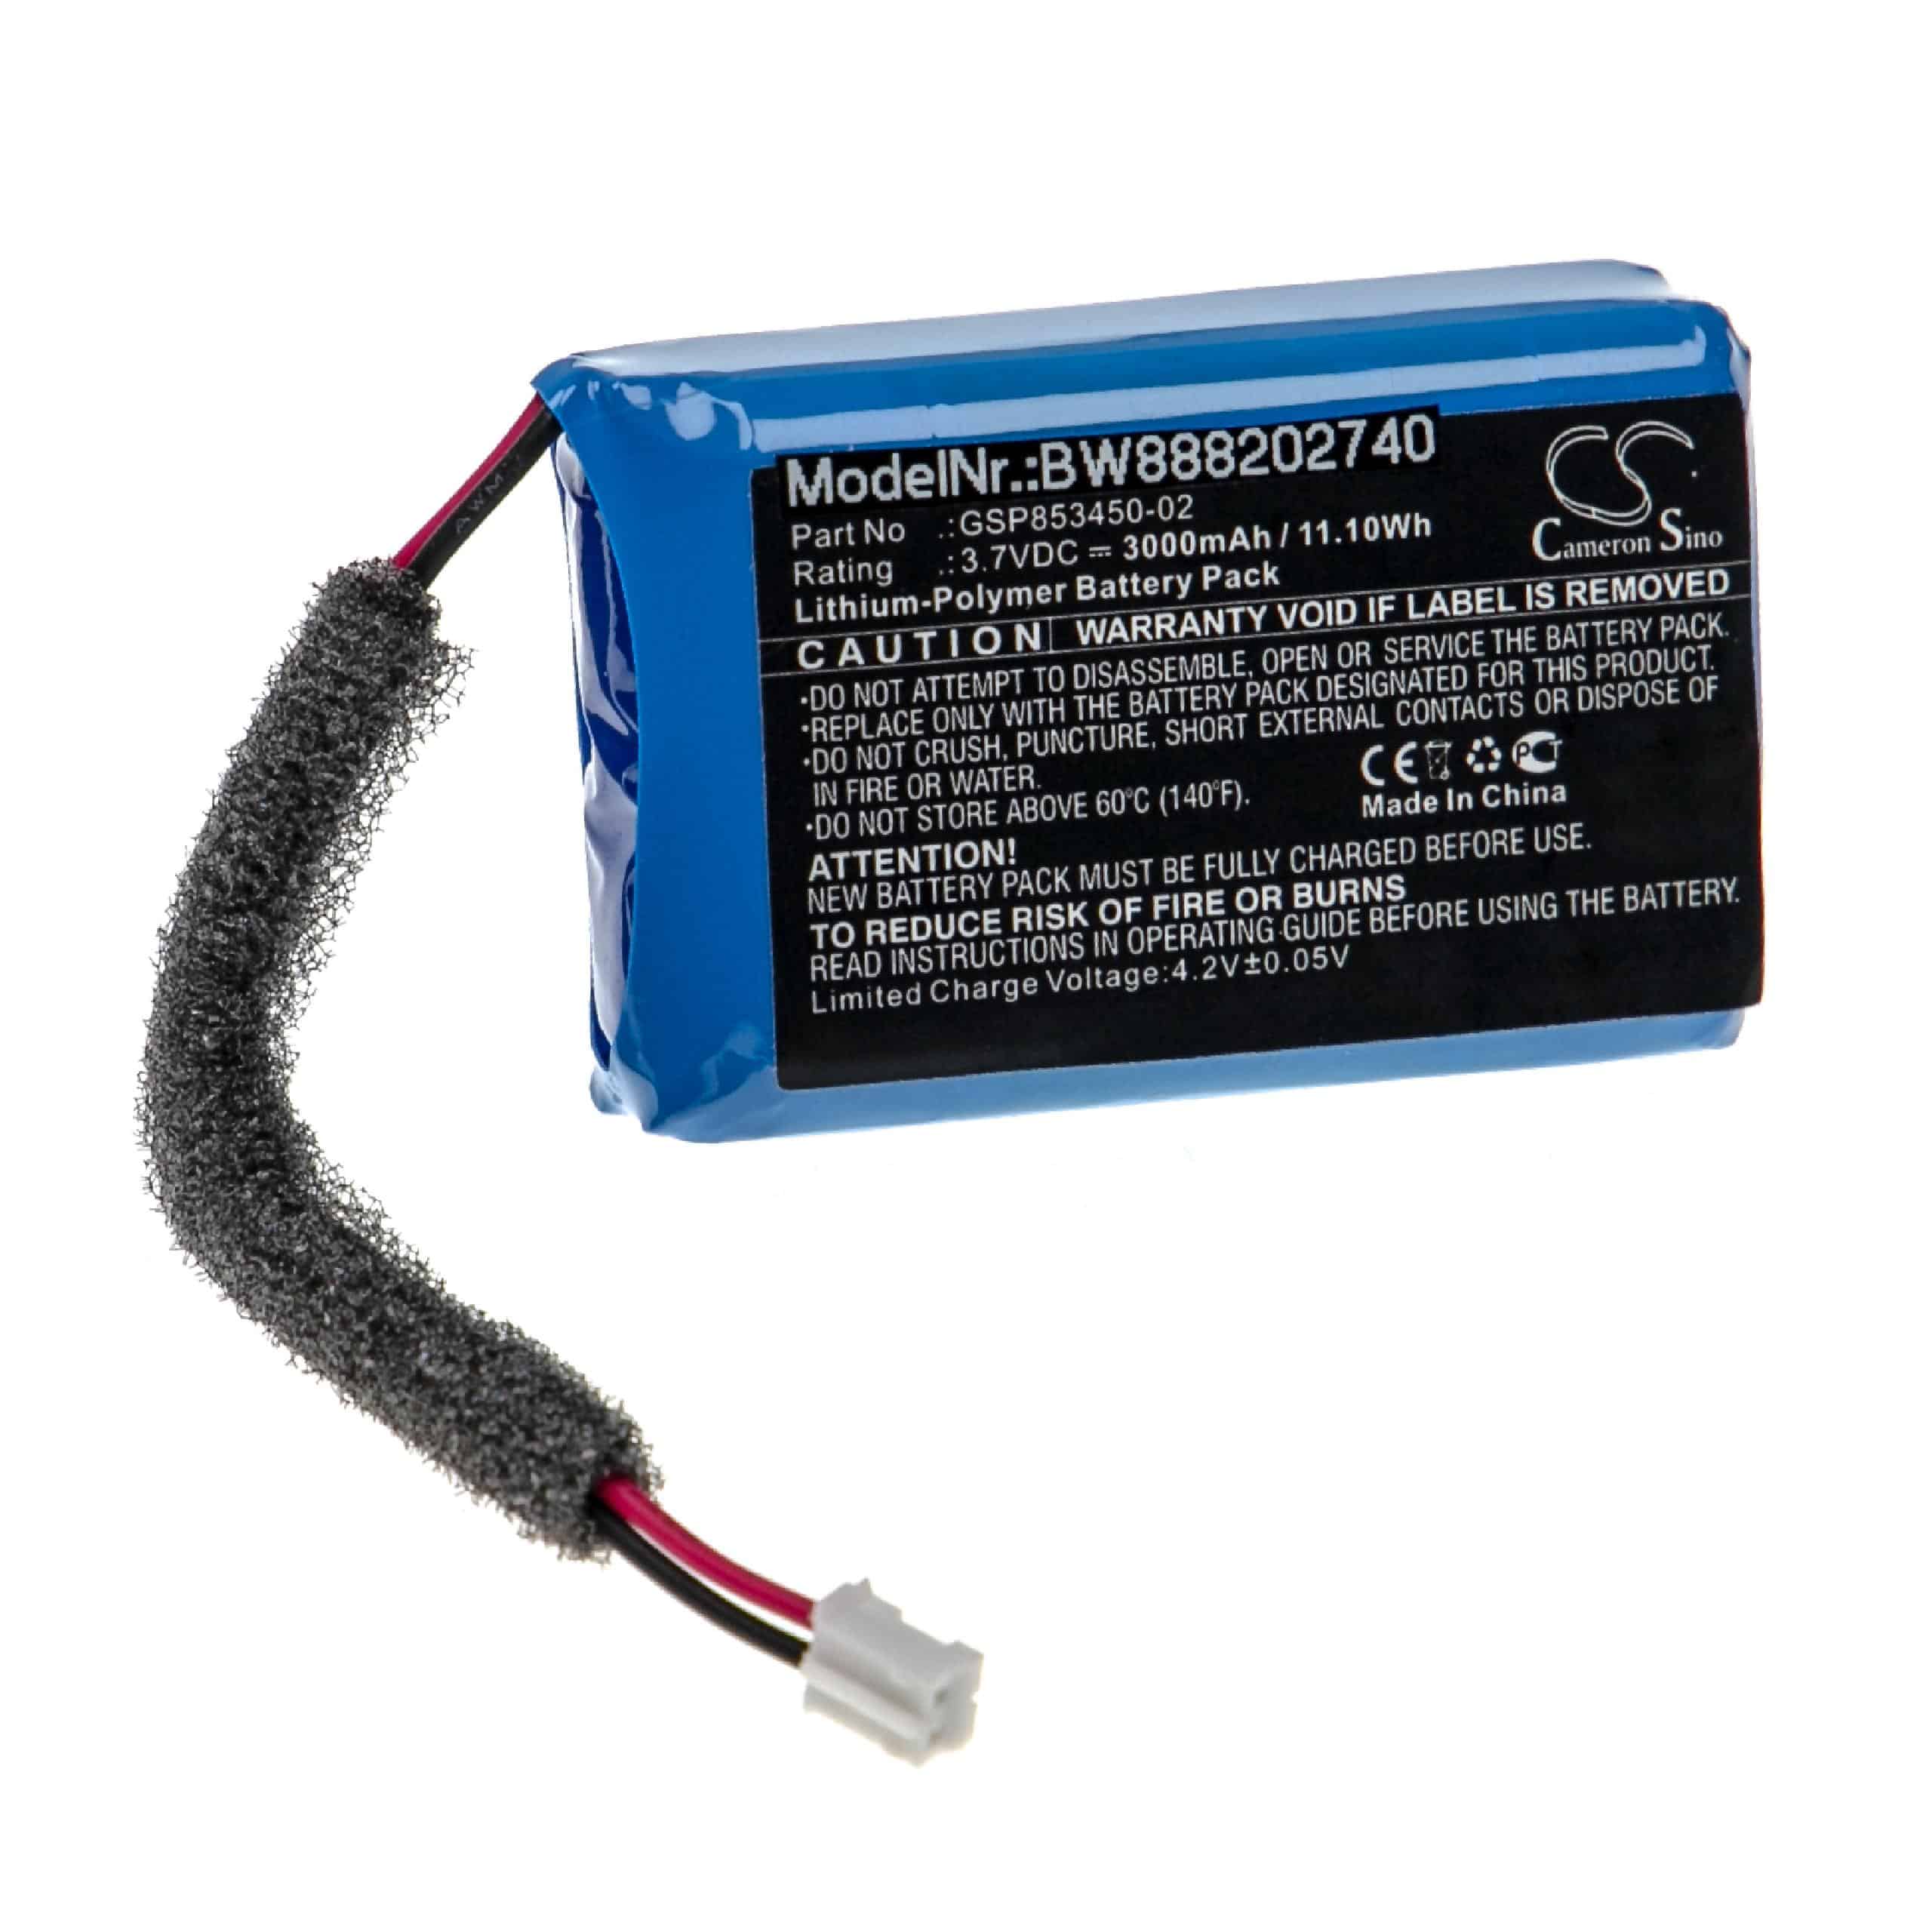 Batterie remplace JBL GSP853450-02 pour enceinte JBL - 3000mAh 3,7V Li-polymère